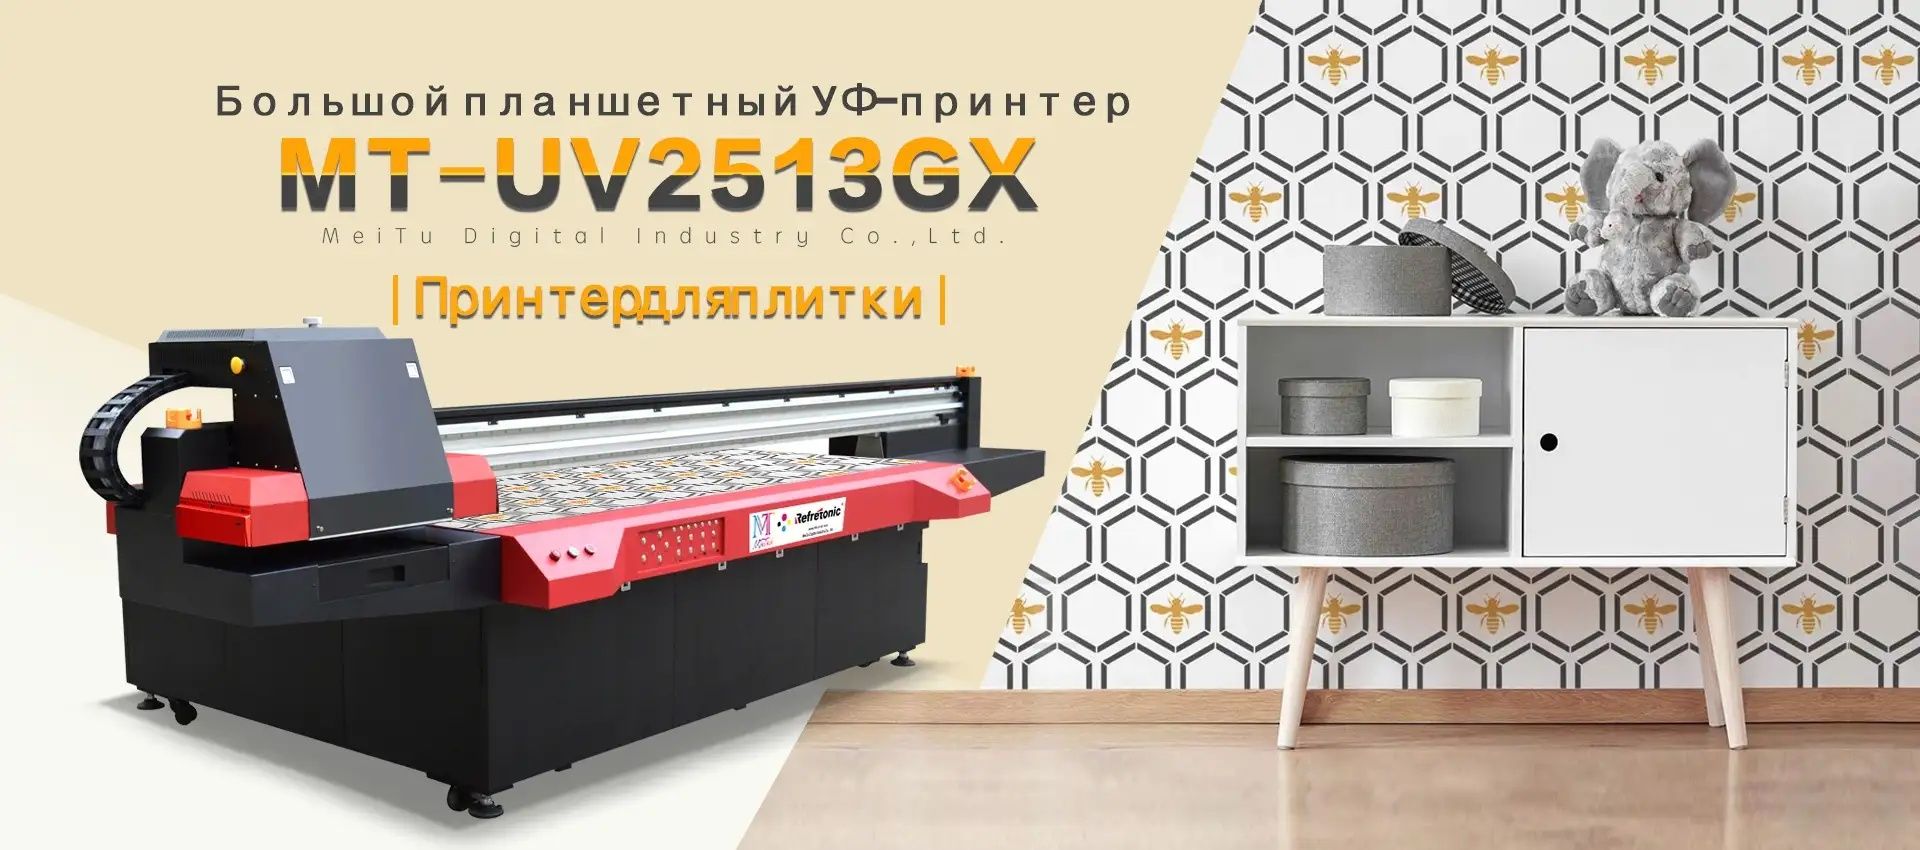 Большой планшетный УФ-принтер MT-UV2513GX RICOH GEN5 HEAD

MT-UV2513GX